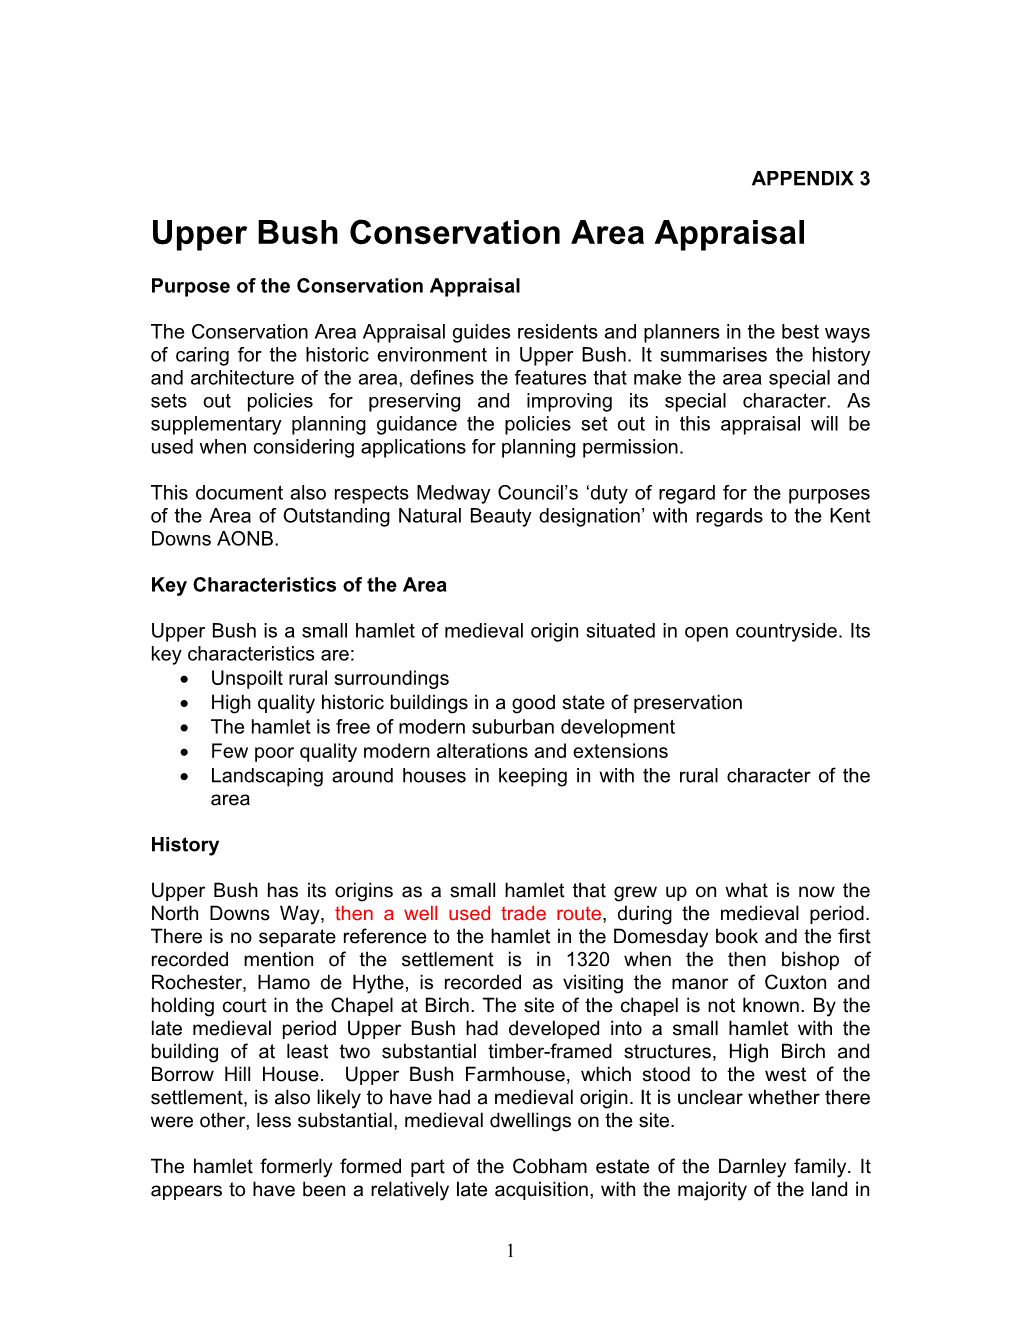 Upper Bush Conservation Area Appraisal